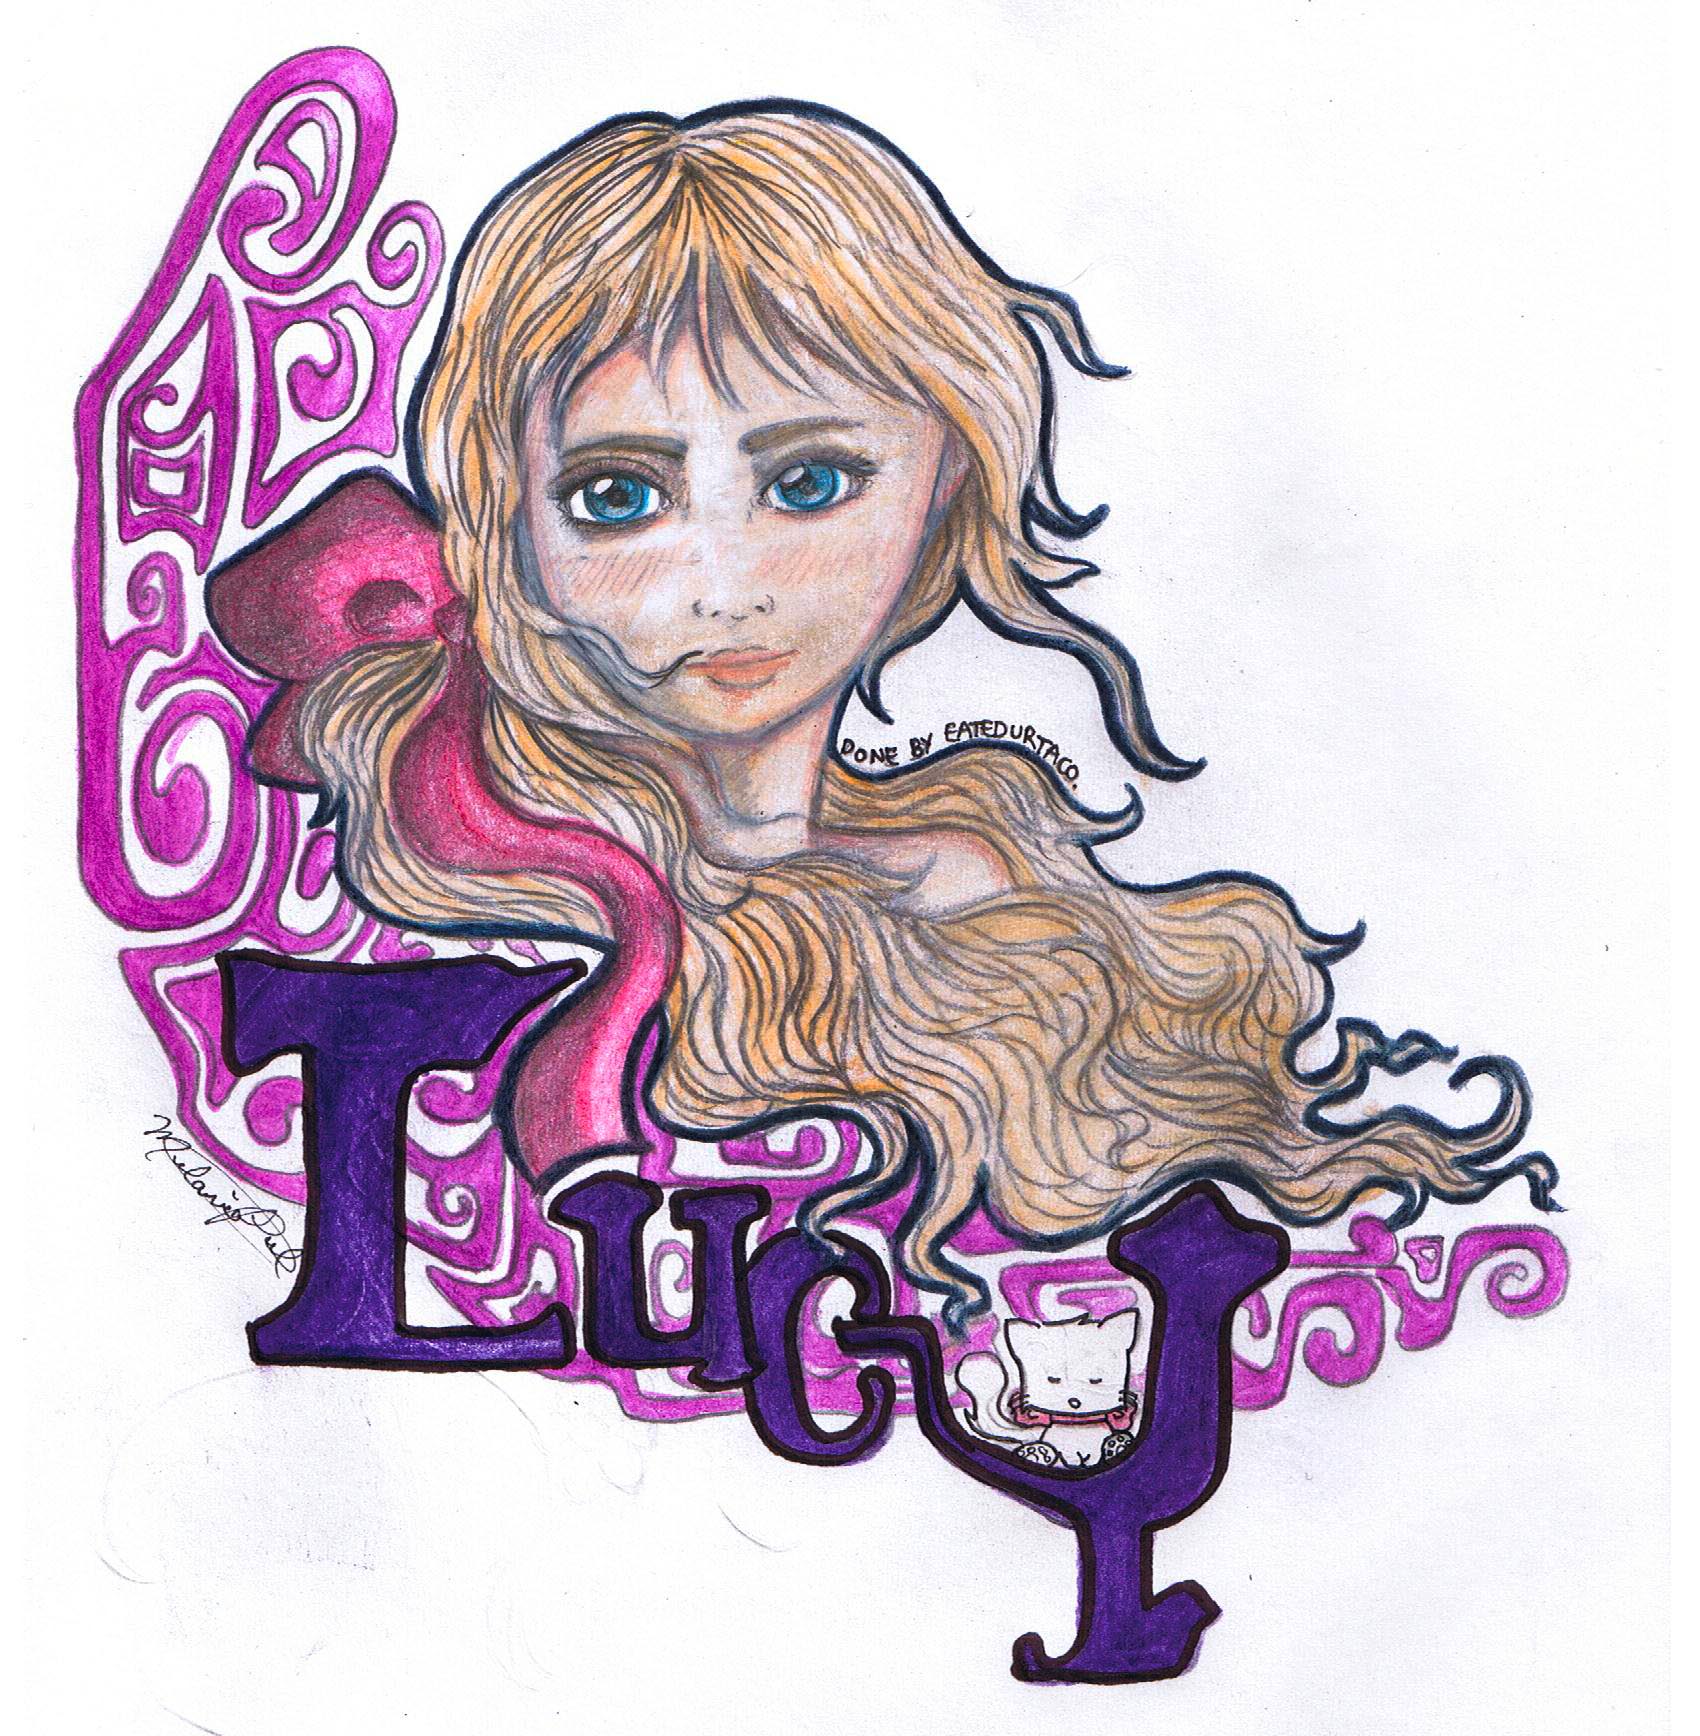 Candybooru image #5025, tagged with Lucy eatedurtaco_(Artist) human